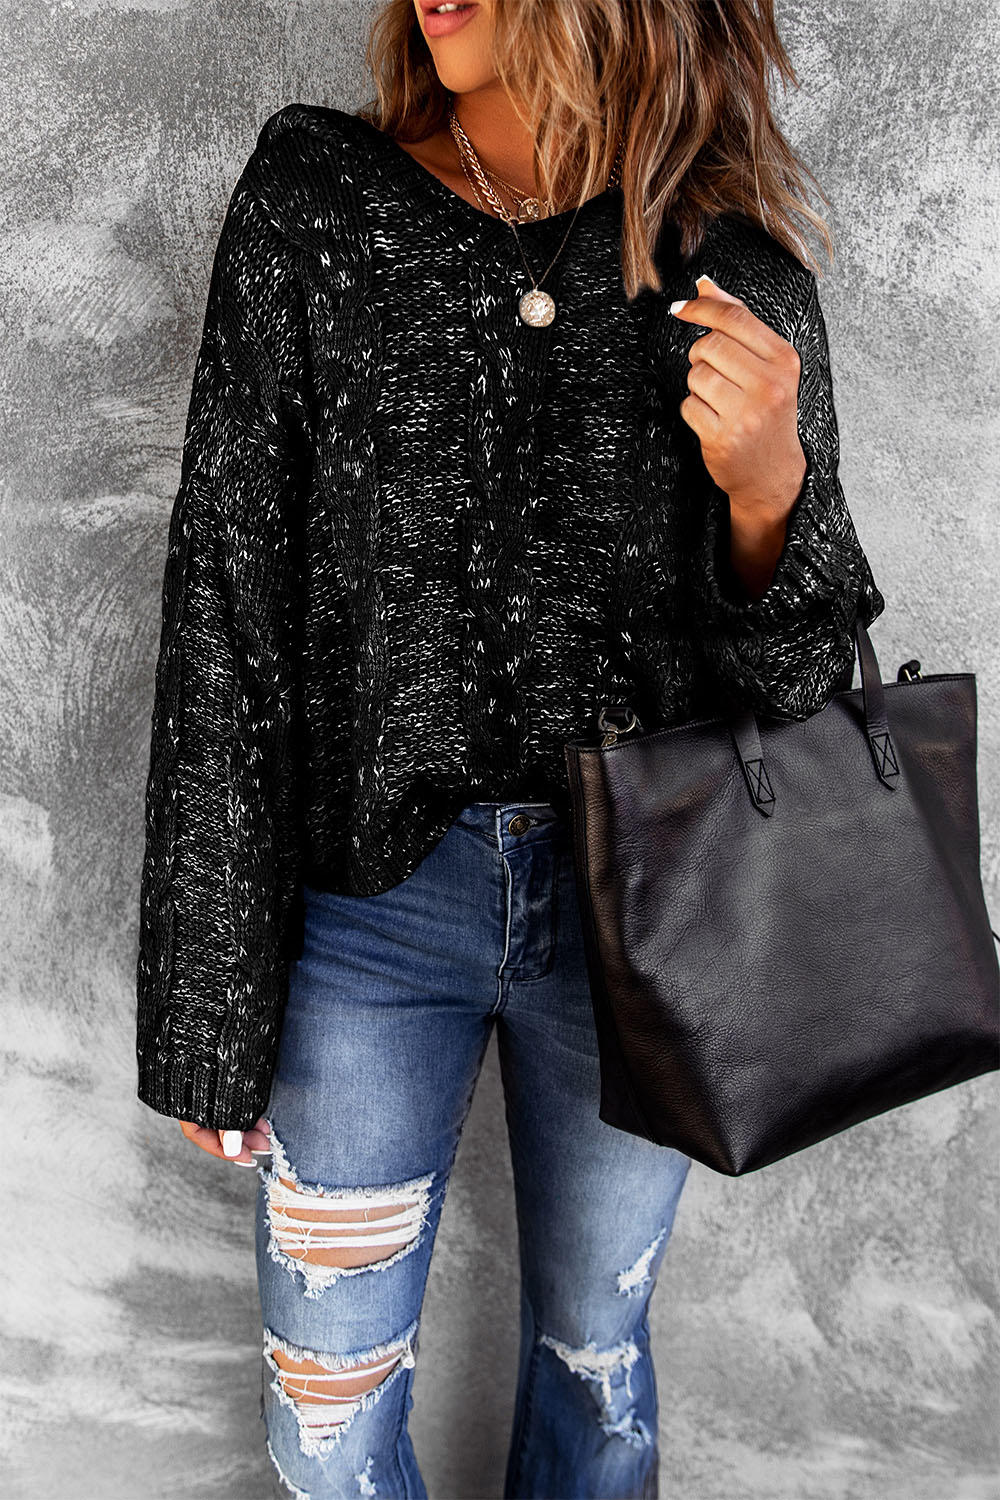 Wholesale Black Knit Long Sleeve Hooded SWEATER for Women 